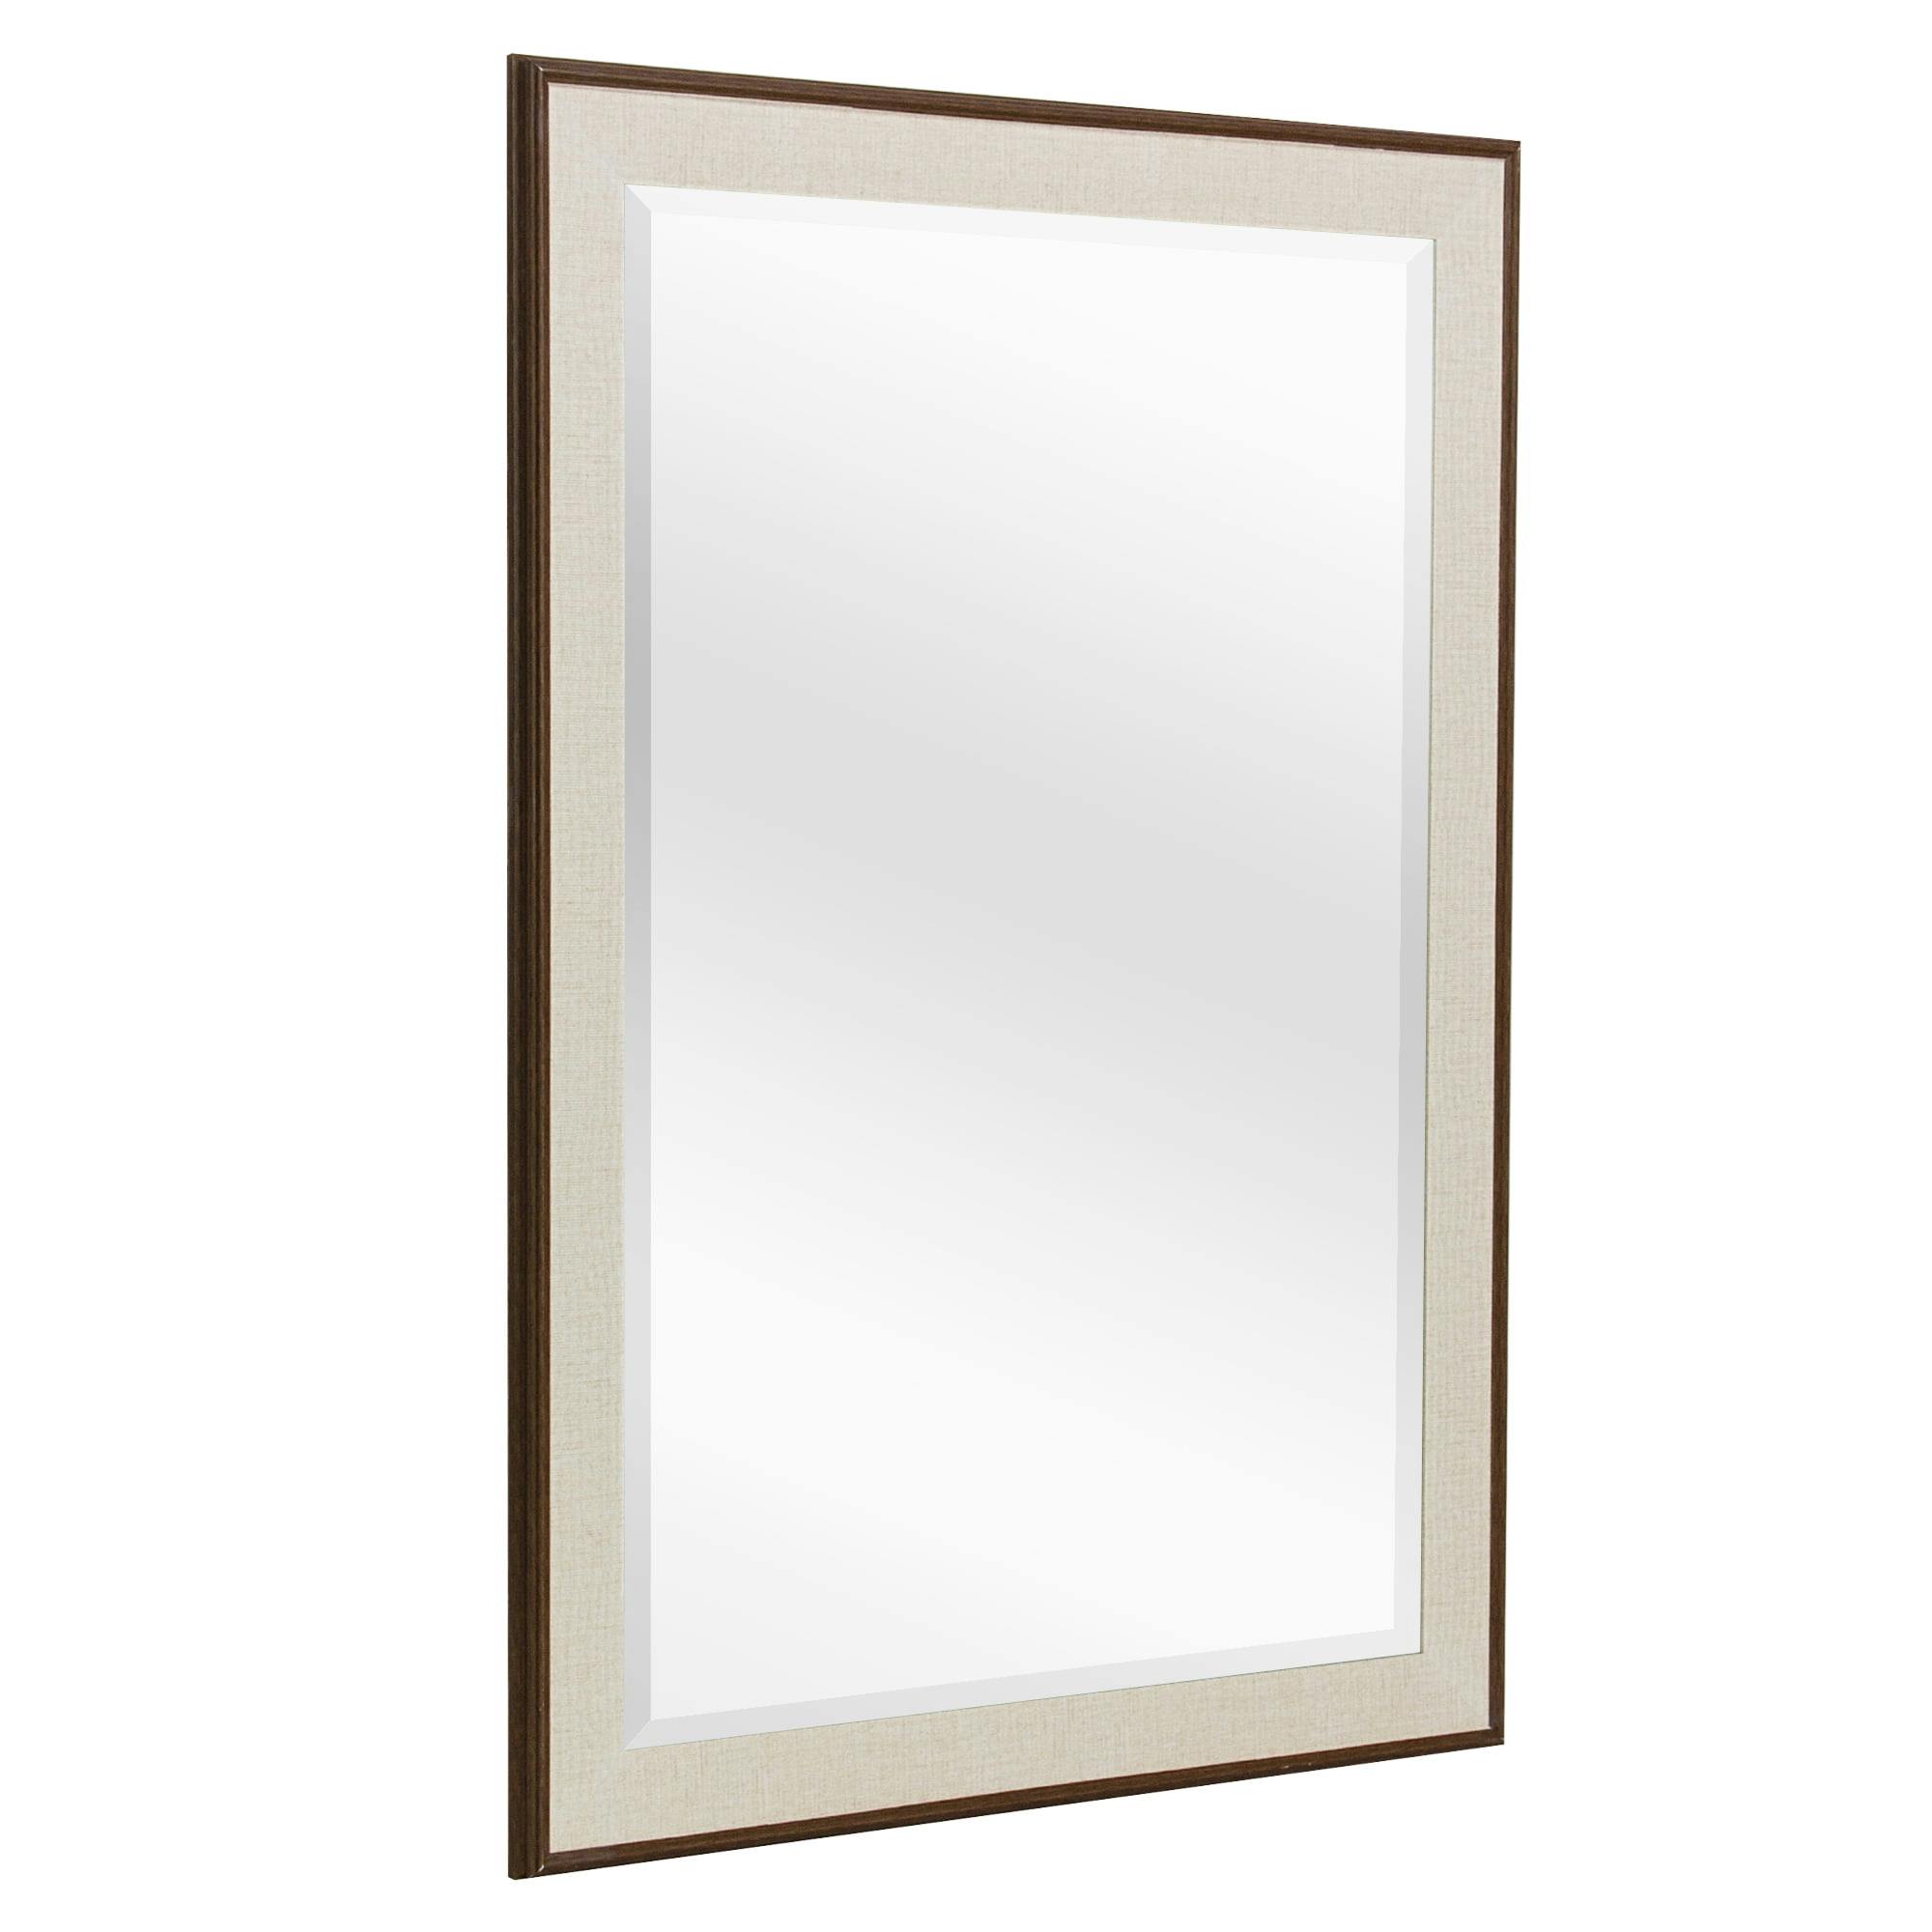 Rustic Brown and Cream Rectangular Vanity Wall Mirror